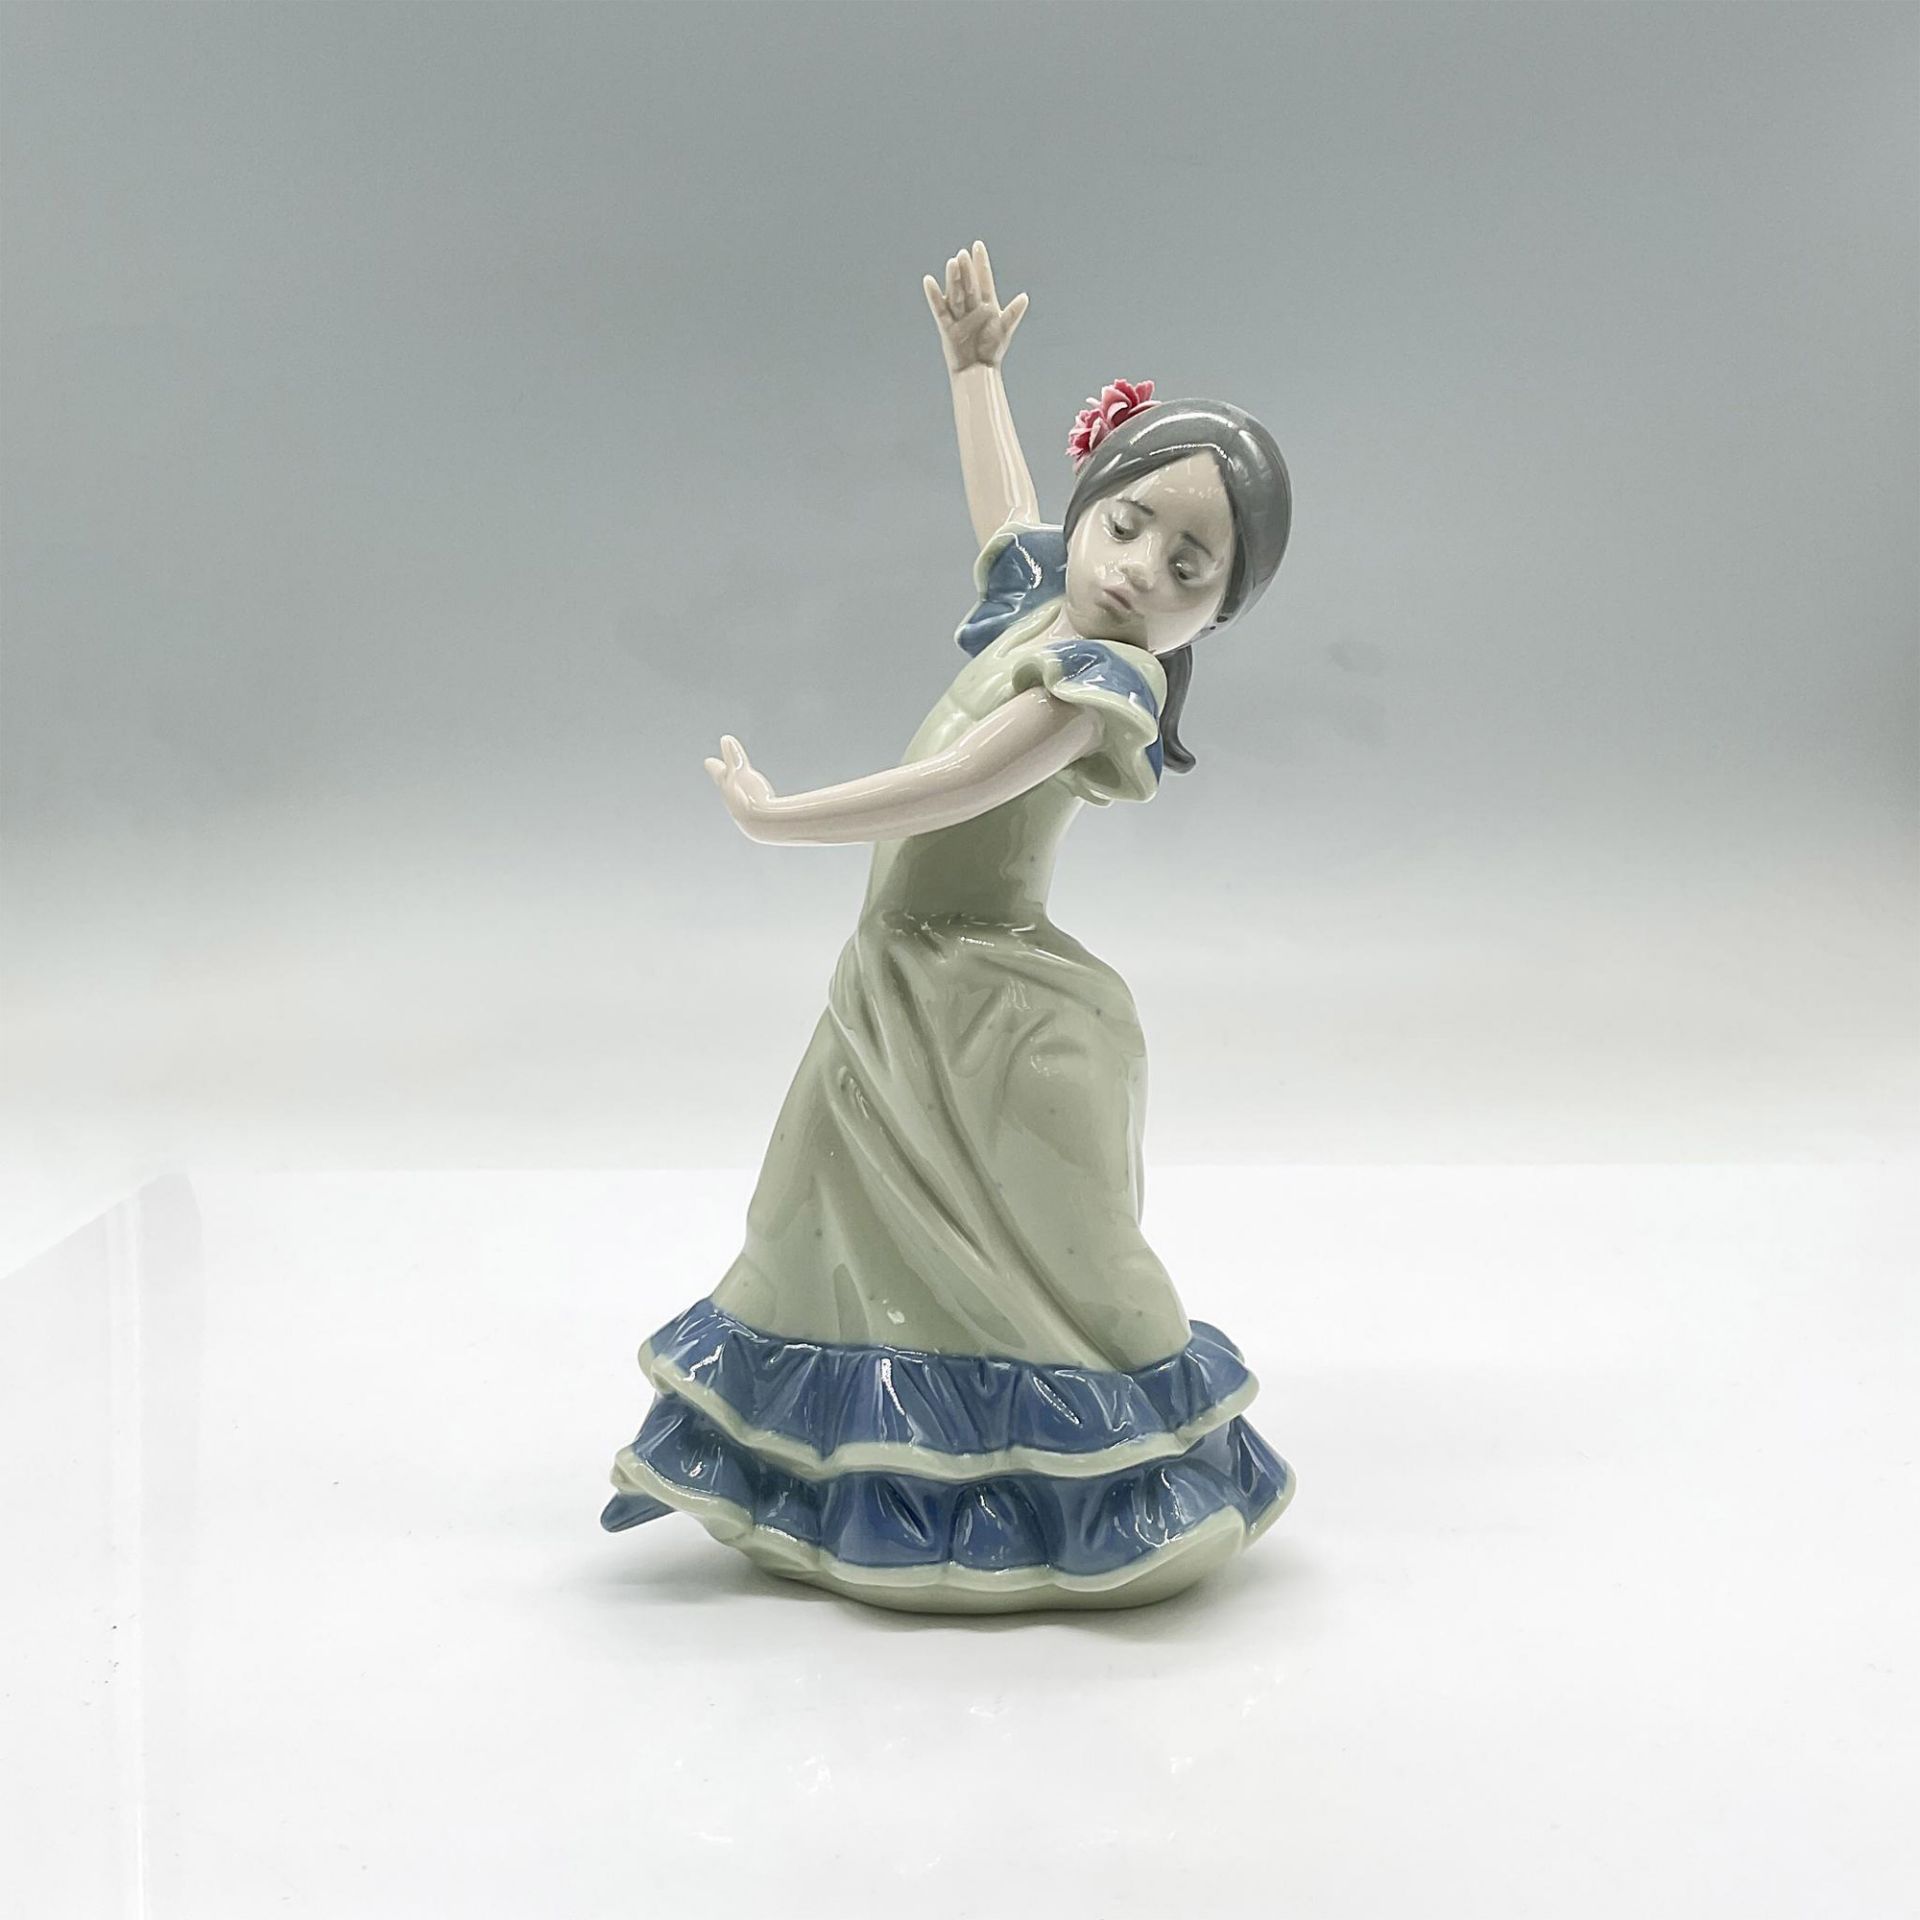 Lolita 1005192 - Lladro Porcelain Figurine